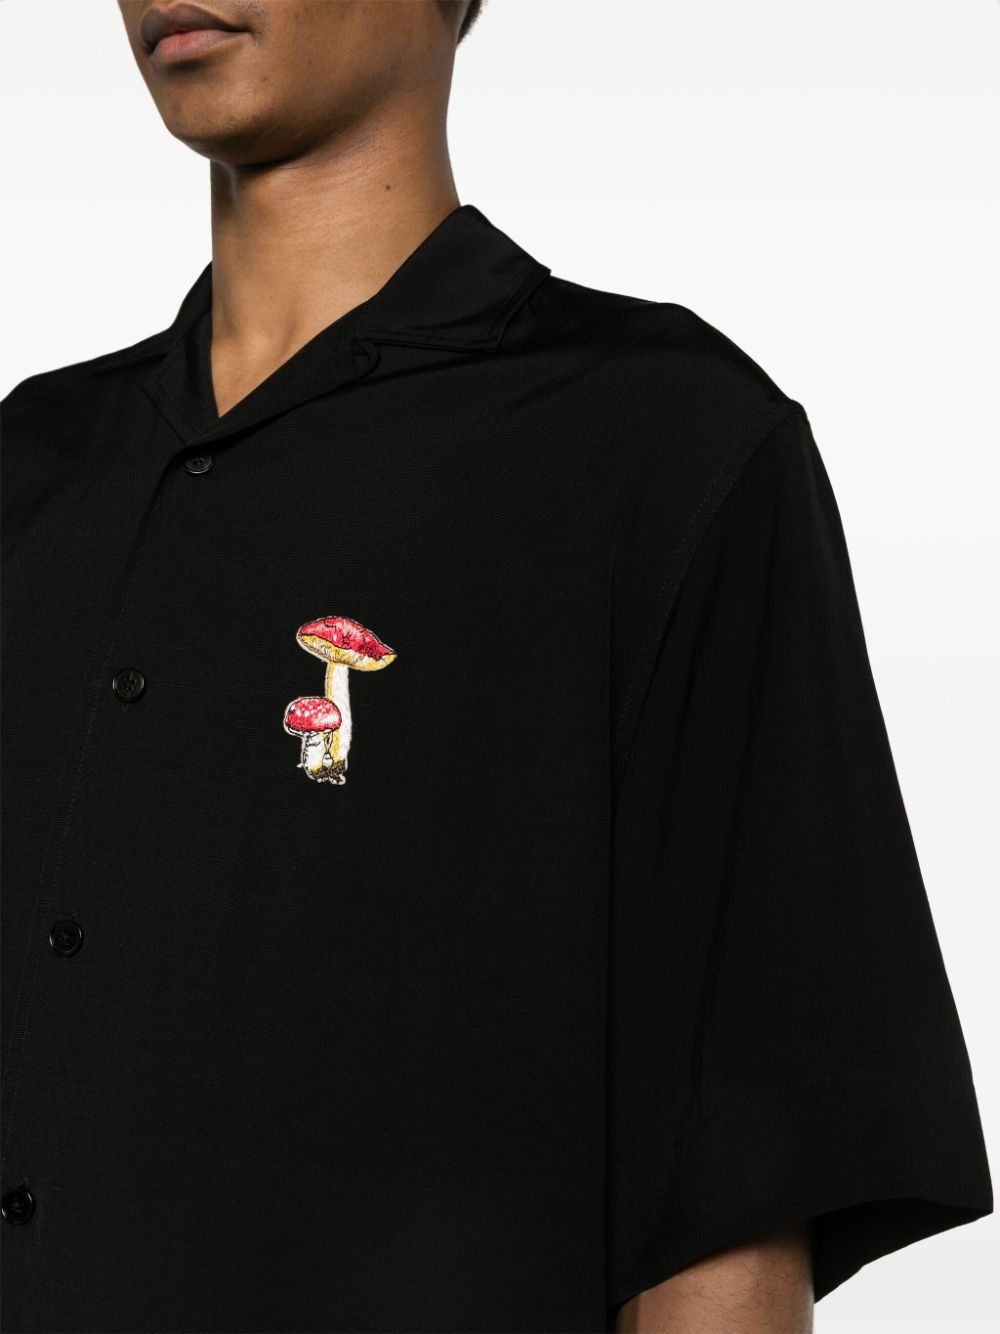 + mushroom-embroidered bowling shirt - 5